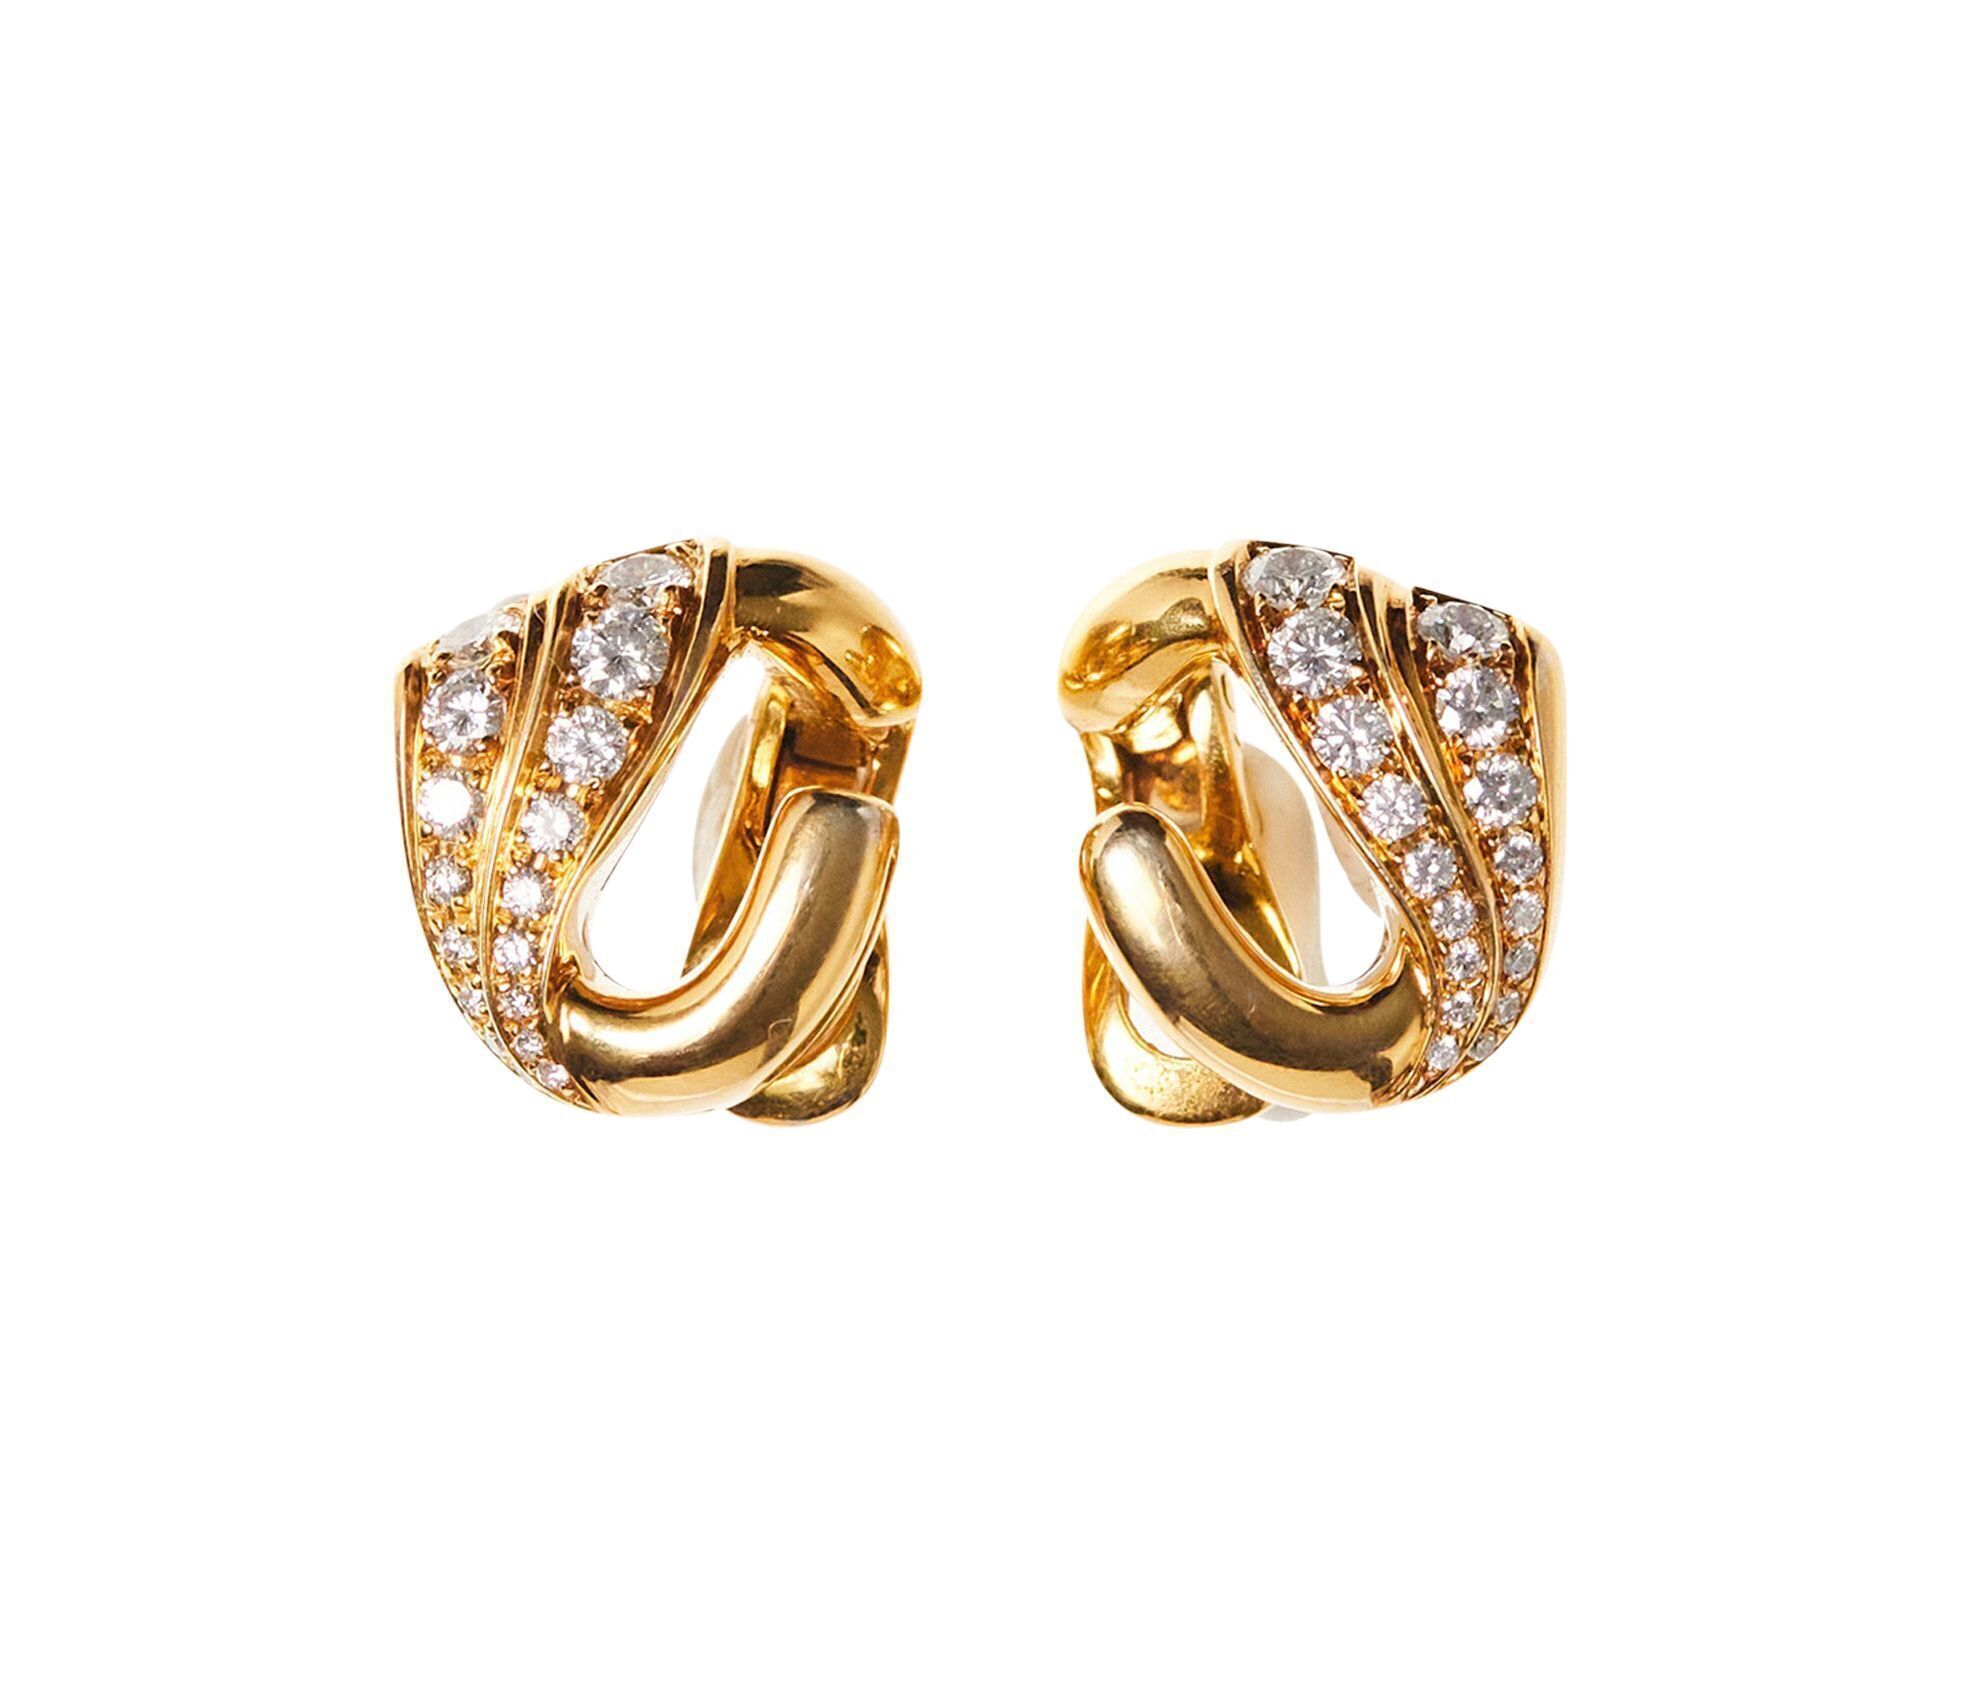 Bvlgari 18K Yellow Gold and Diamond Earrings